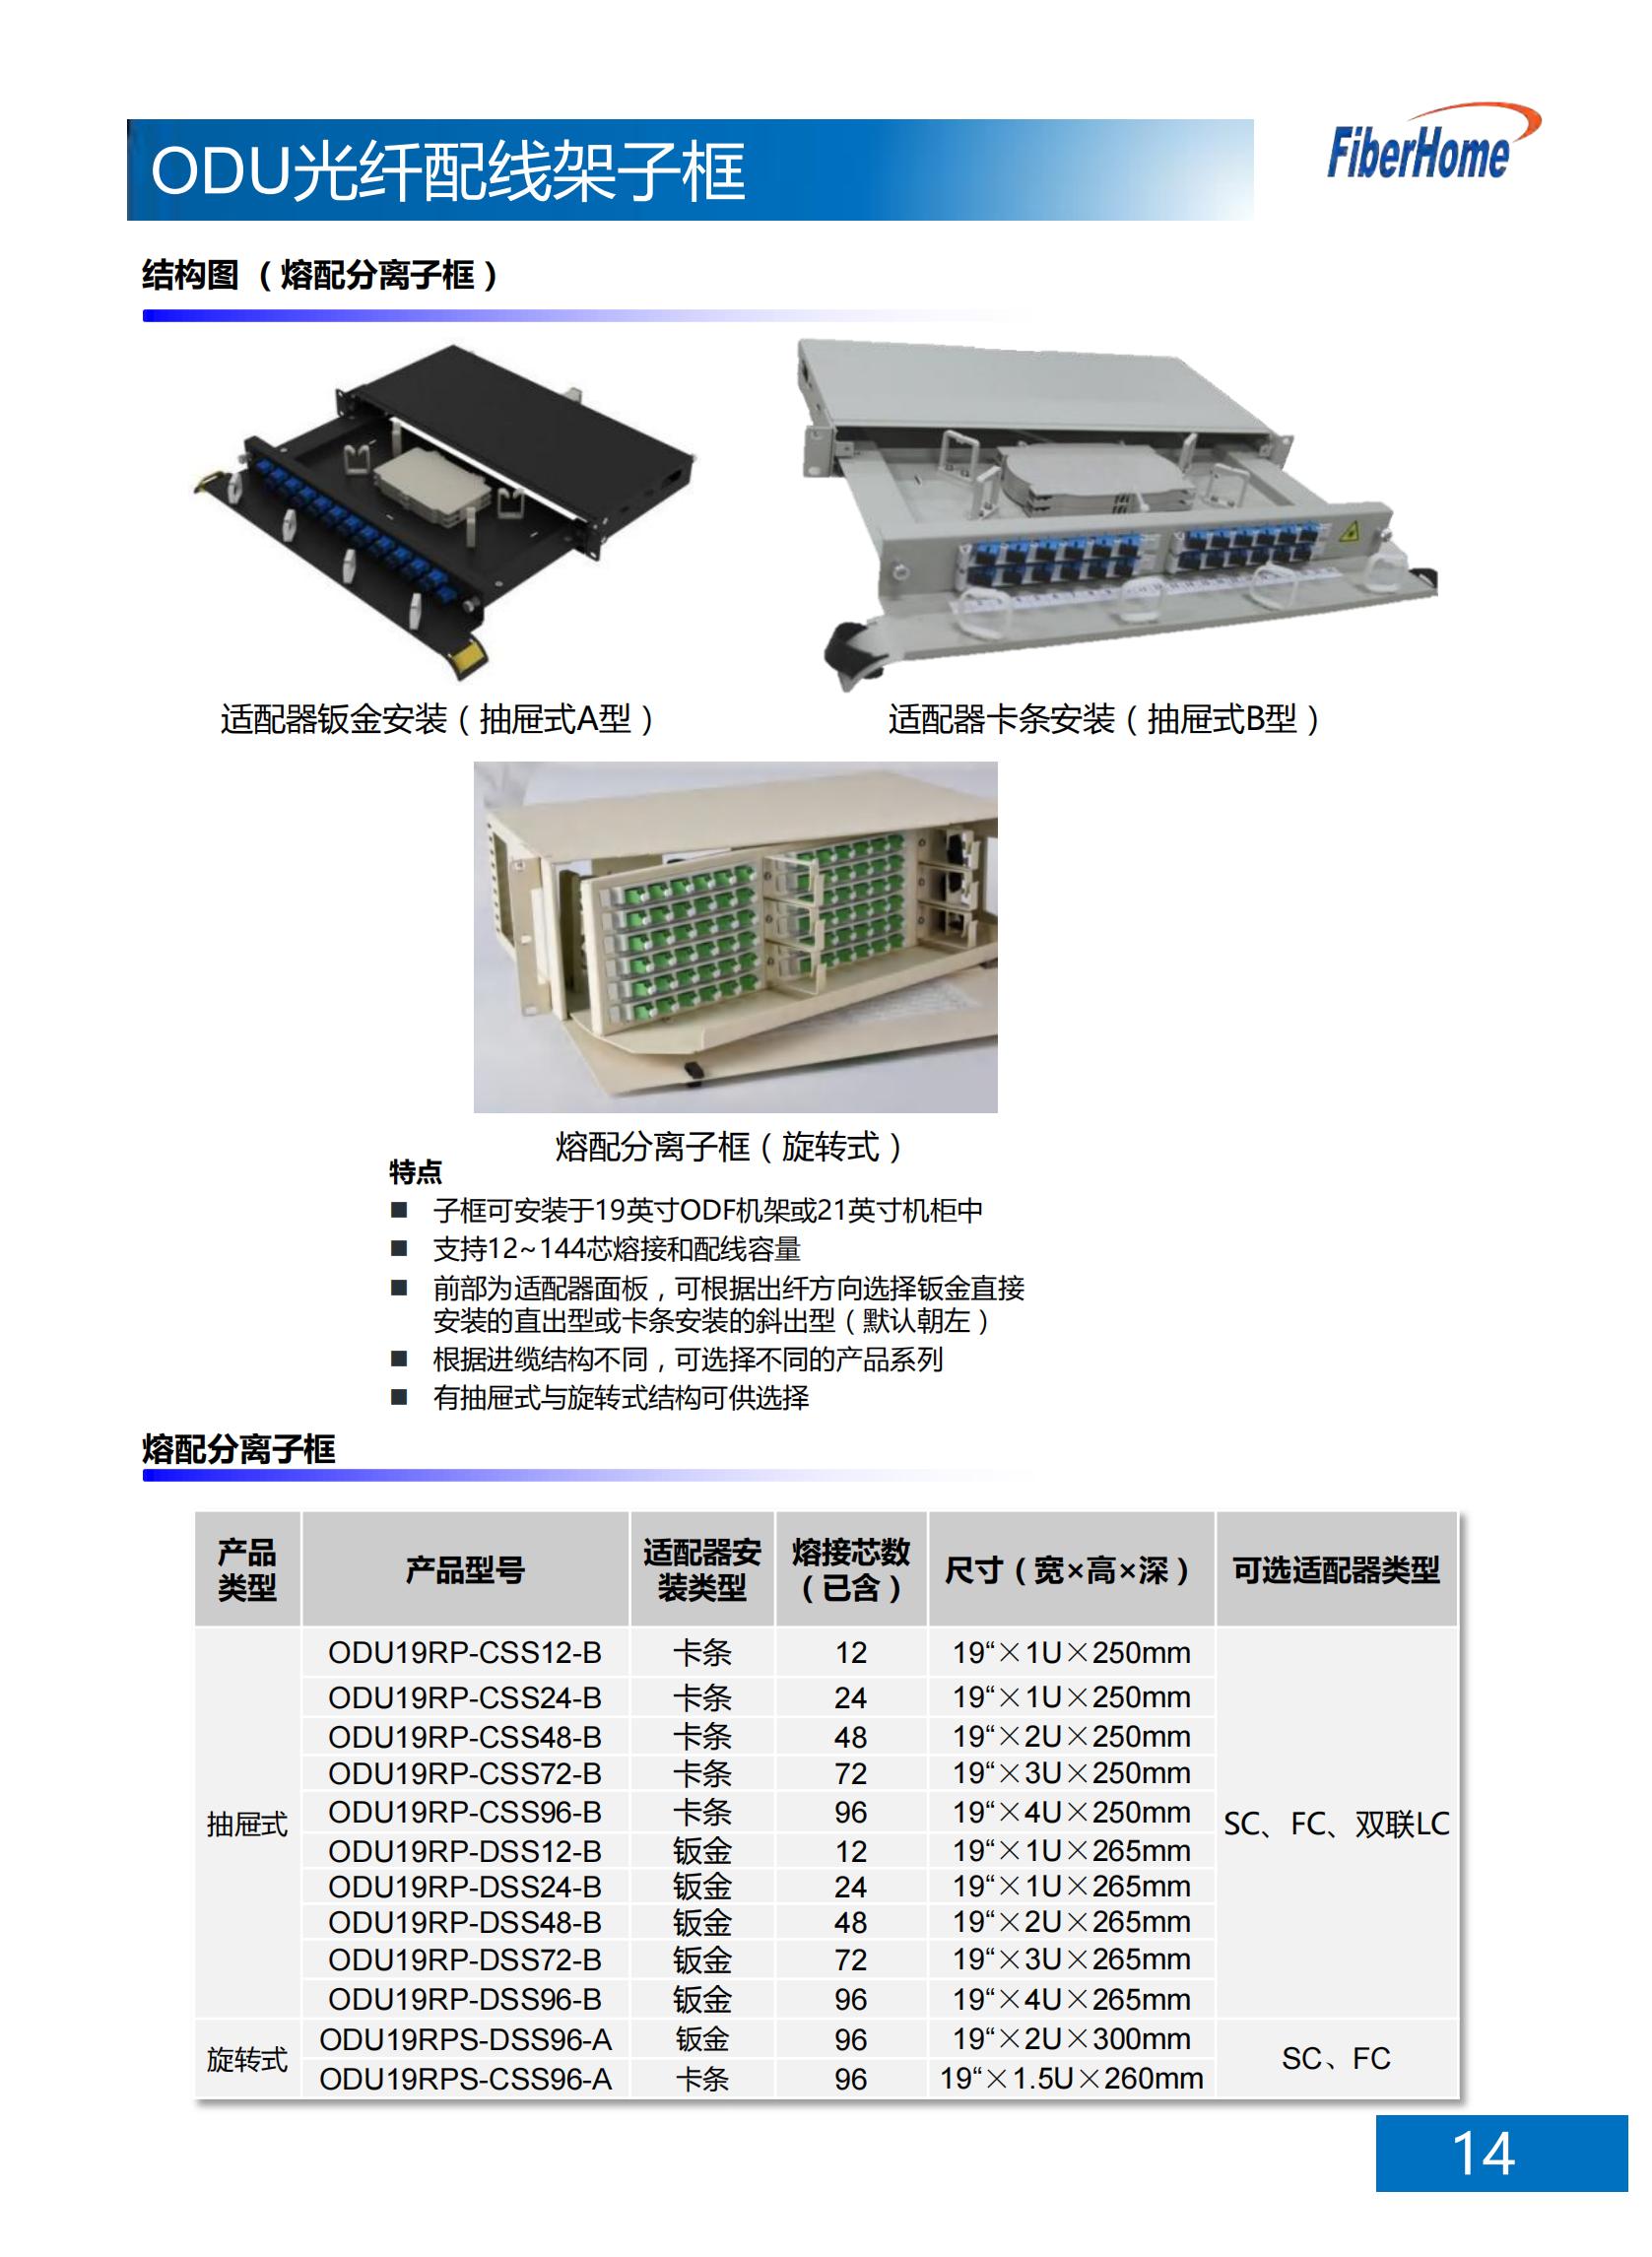 24-core ODU optical fiber distribution shelf frame ODU19T-A24-A-FC (including 12-core FC fusion integration unit*2)